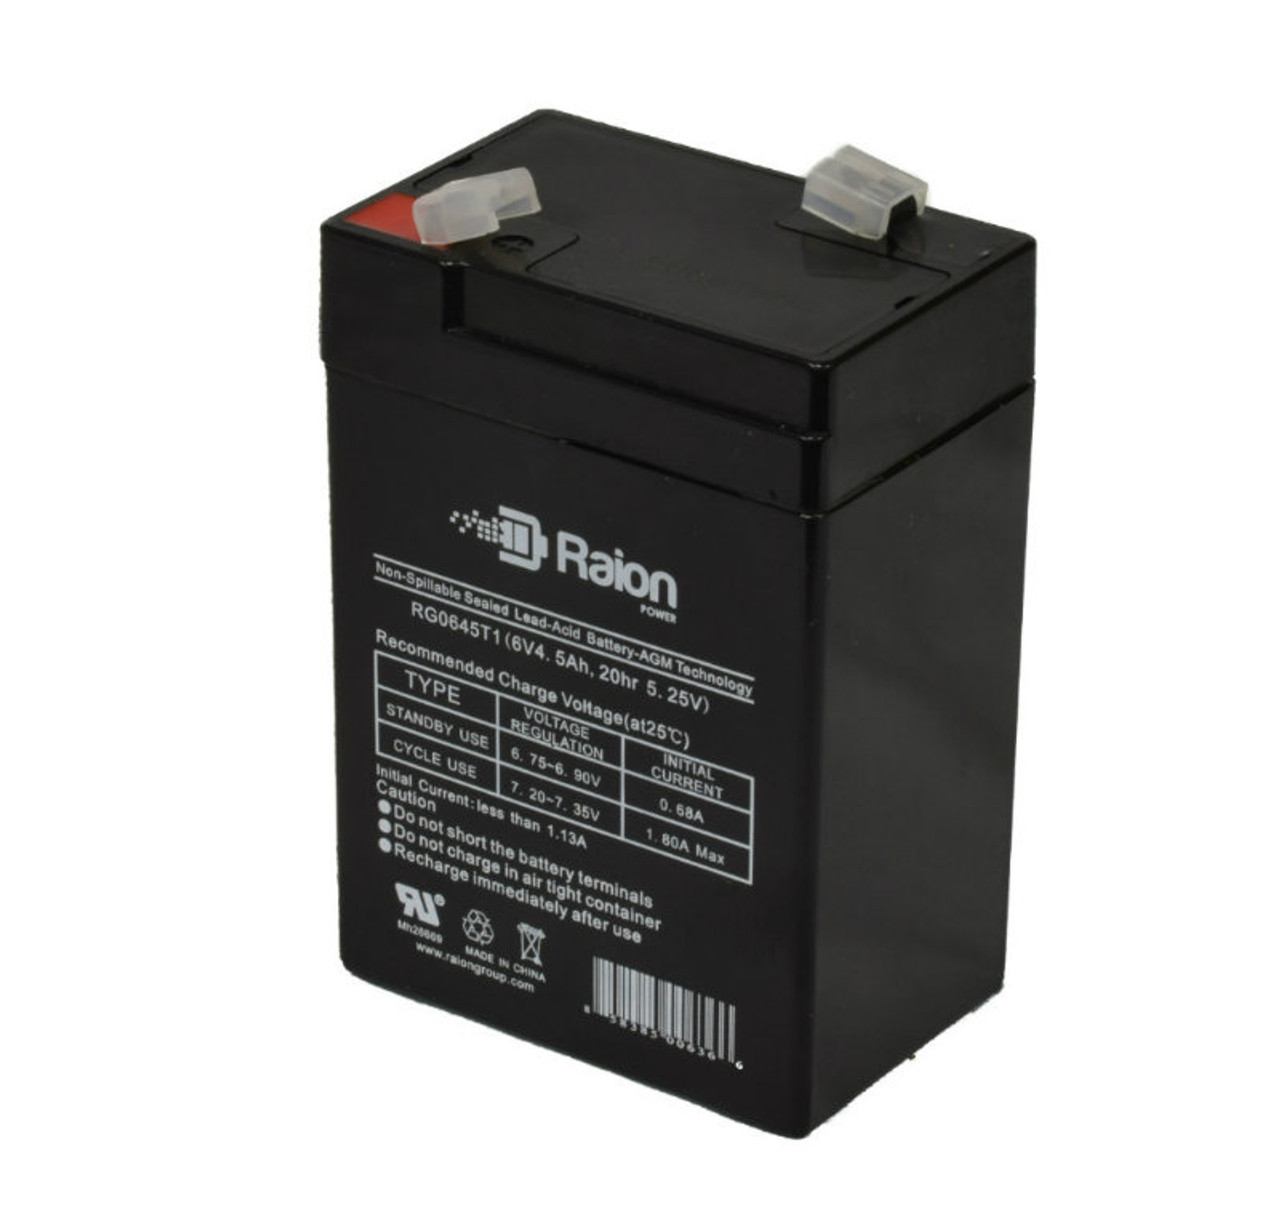 Raion Power RG0645T1 6V 4.5Ah Replacement Battery Cartridge for Teledyne Big Beam S64